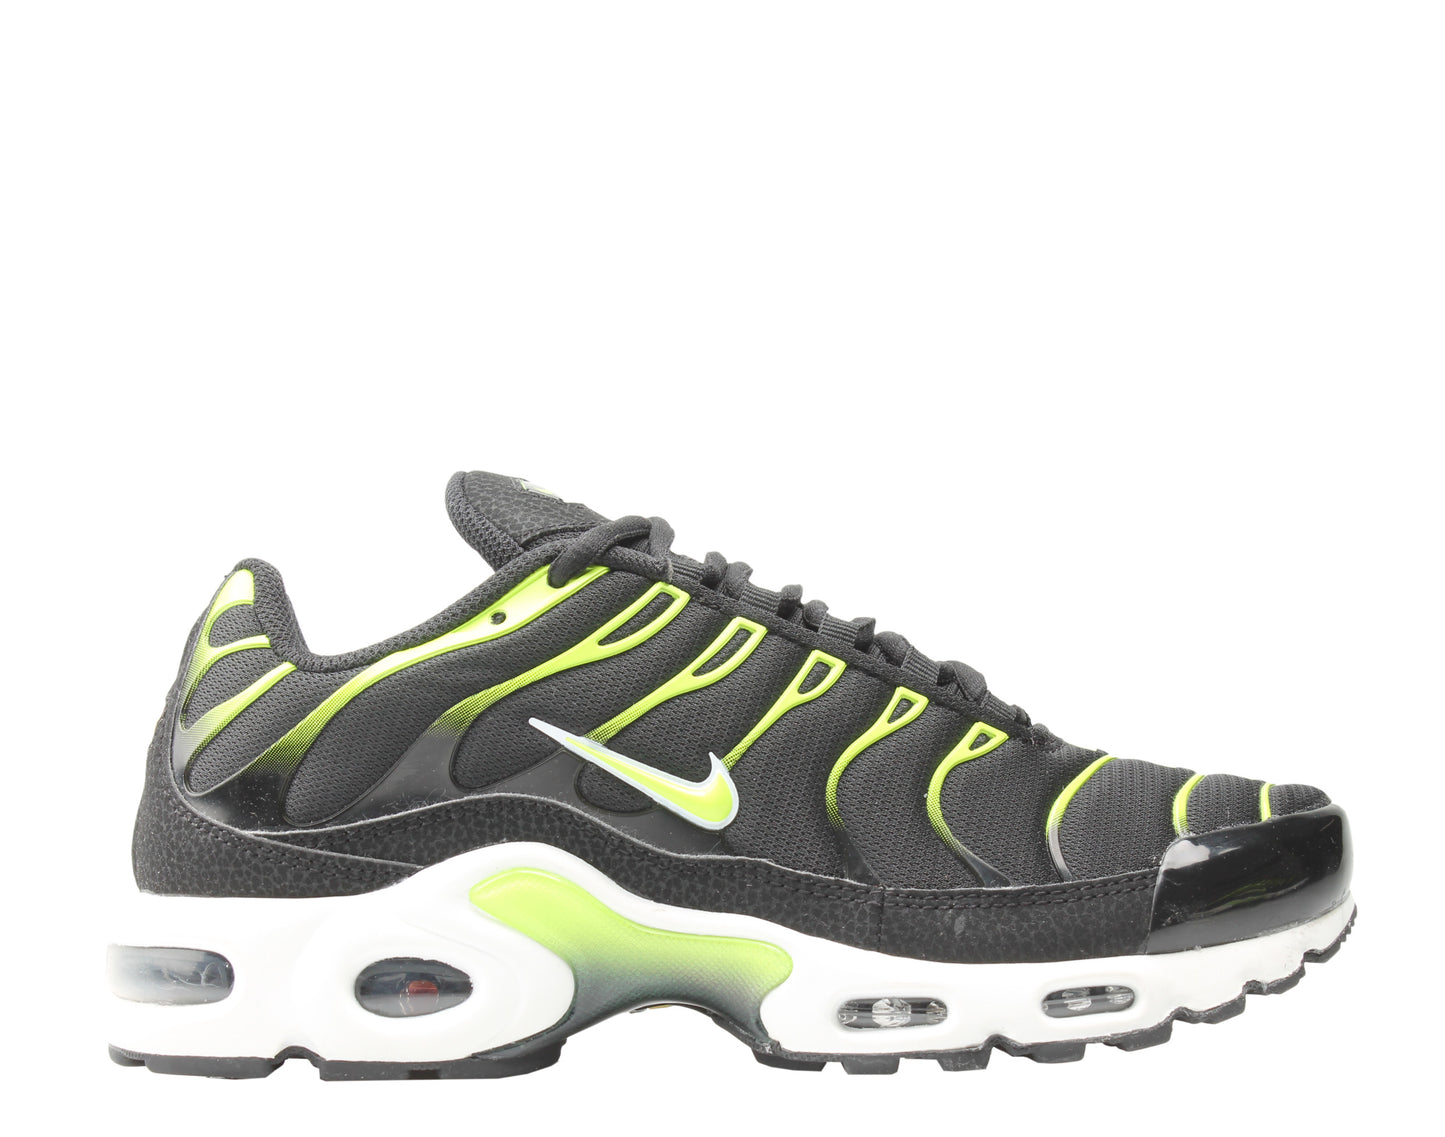 Nike Air Max Plus Black/Volt-White-Platnium Tint Men's Running Shoes 852630-037